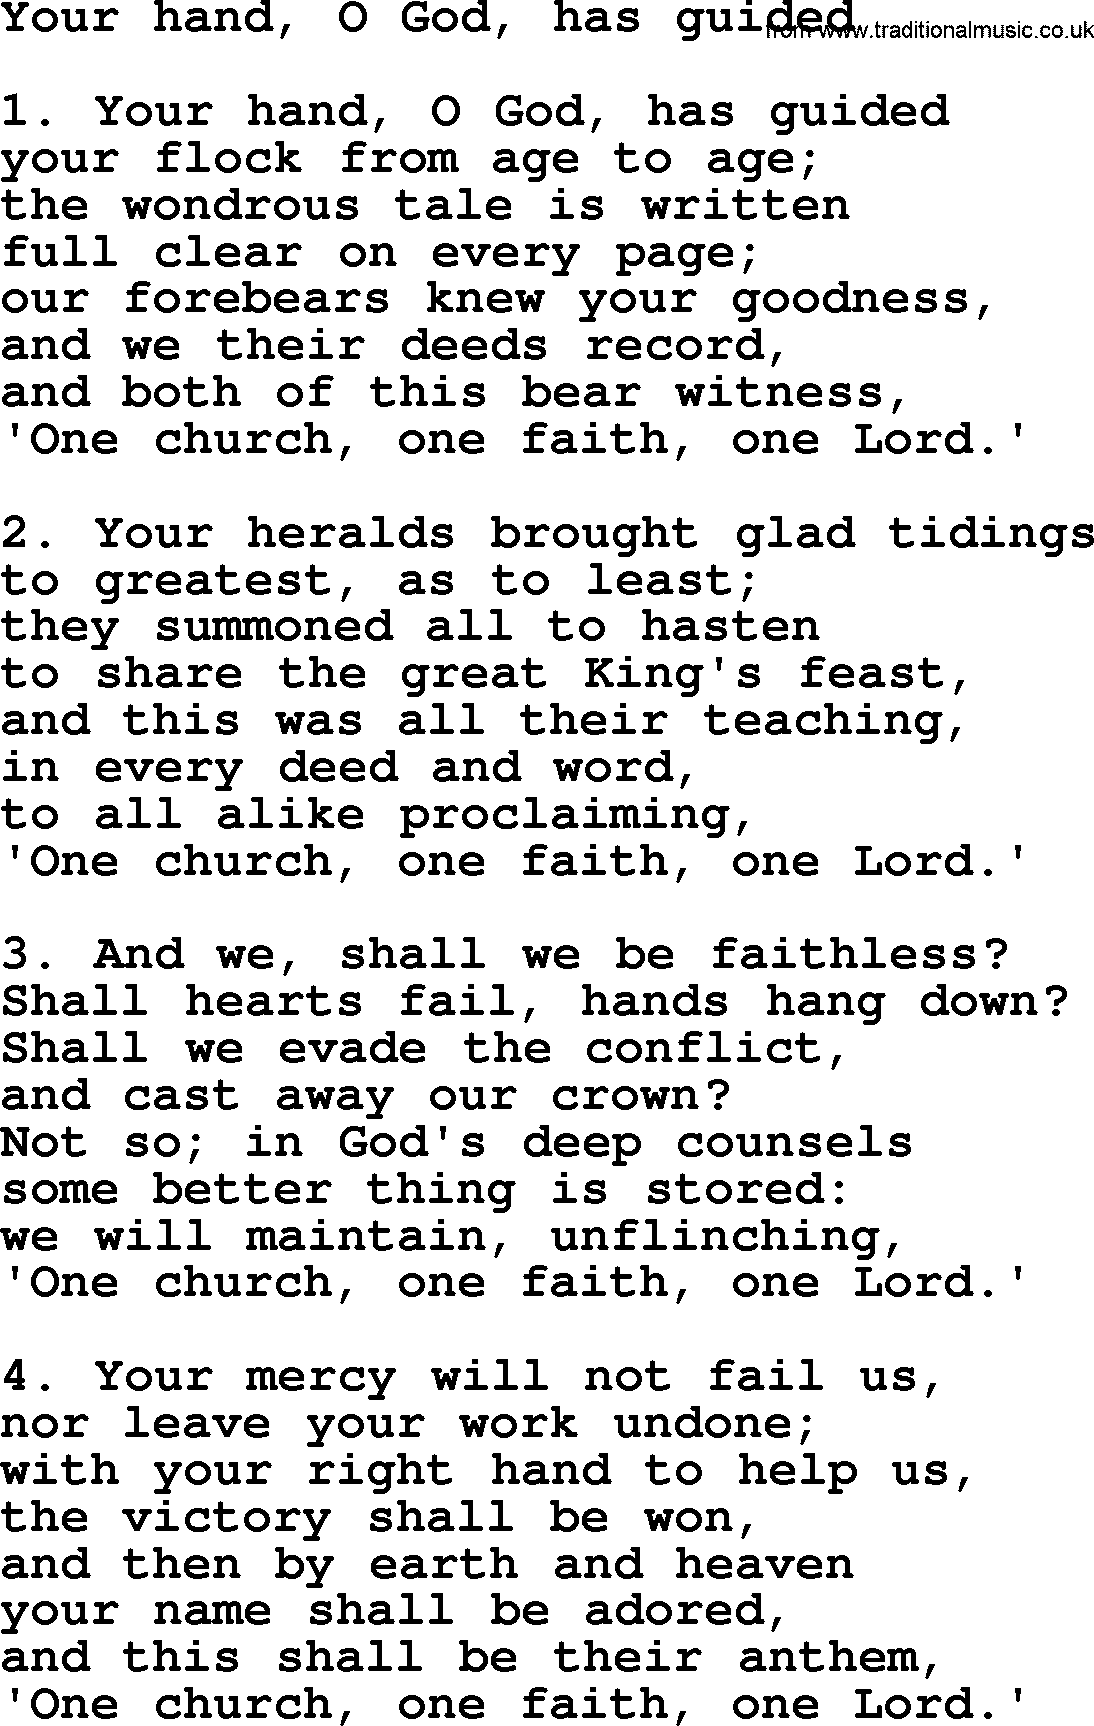 Presbyterian Hymns collection, Hymn: Your Hand, O God, Has Guided, lyrics and PDF